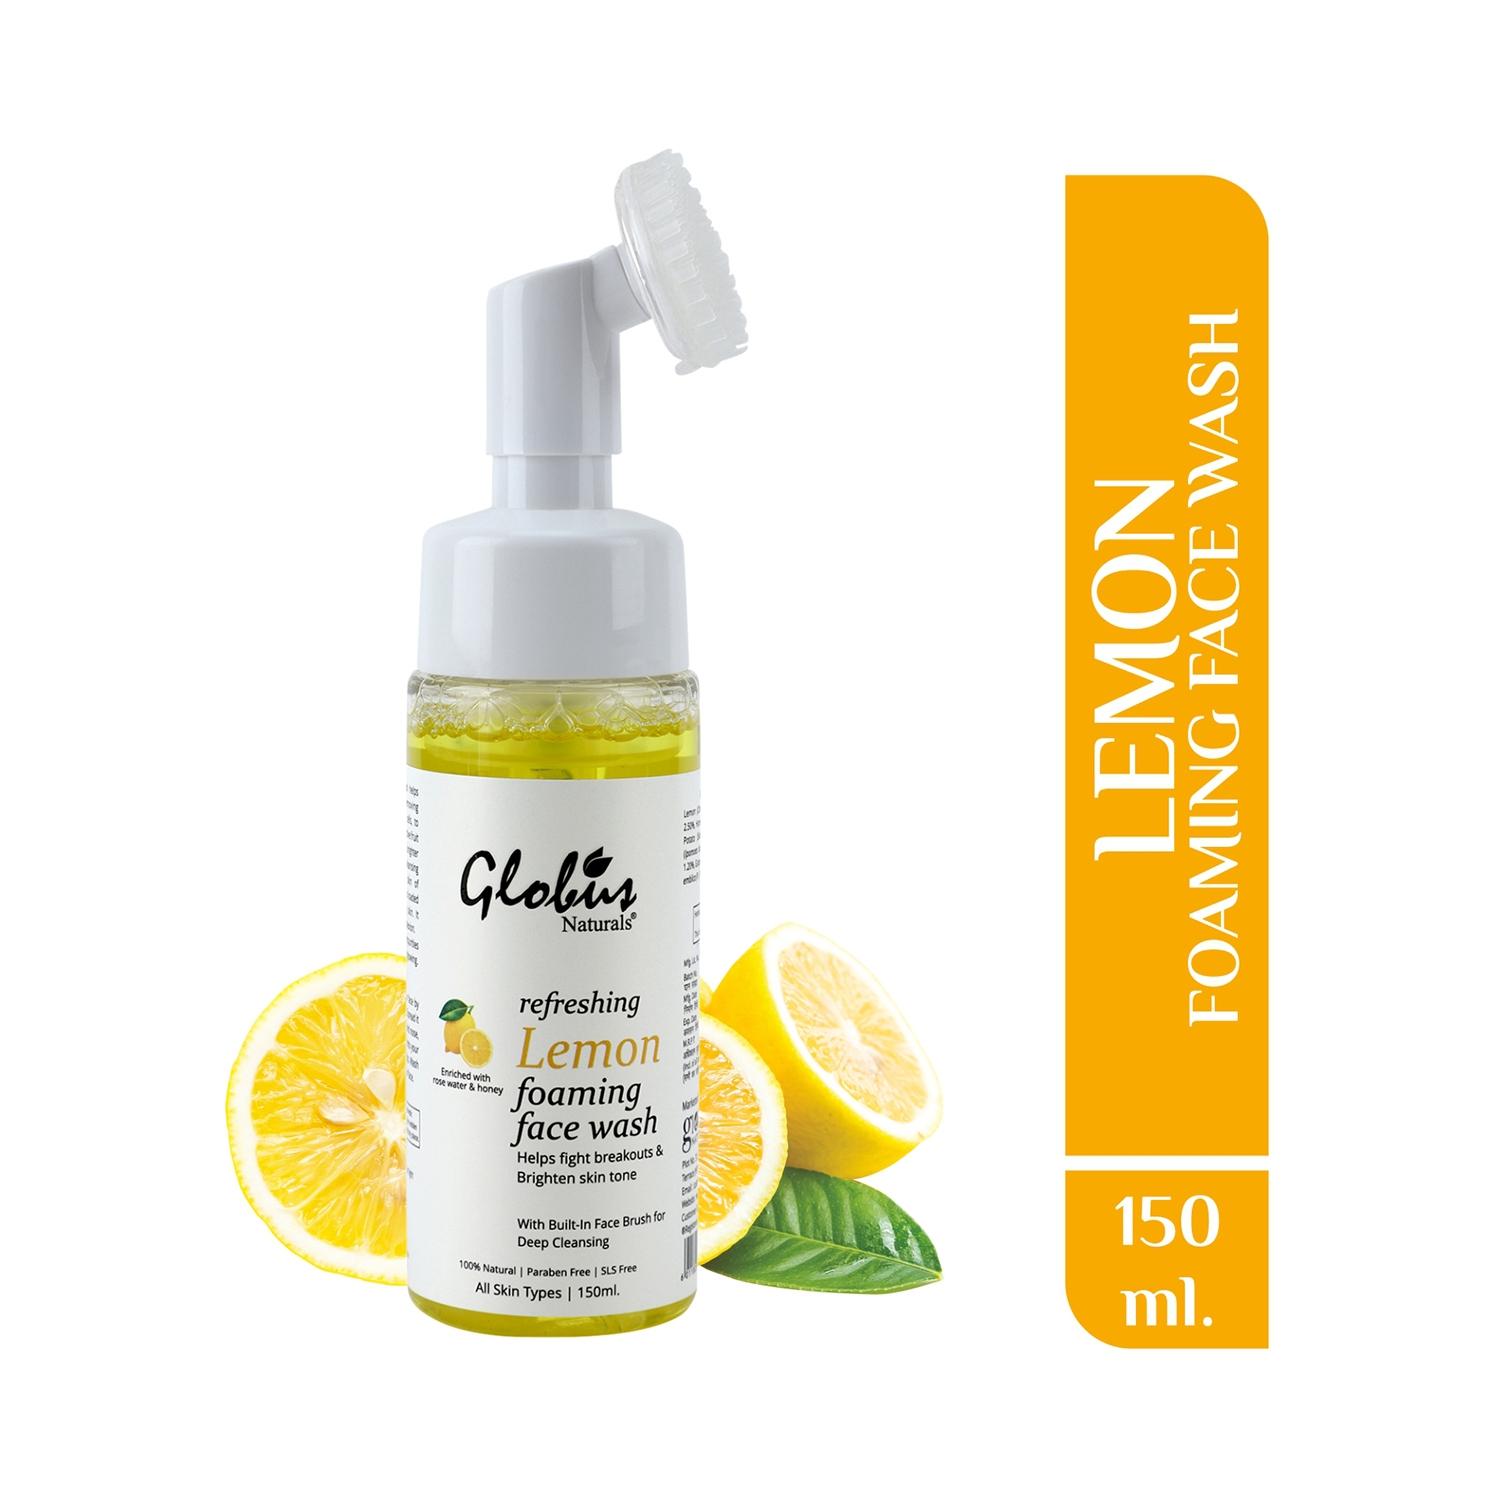 Globus Naturals Refreshing Lemon Foaming Face Wash With Silicone Face Massage Brush (150ml)